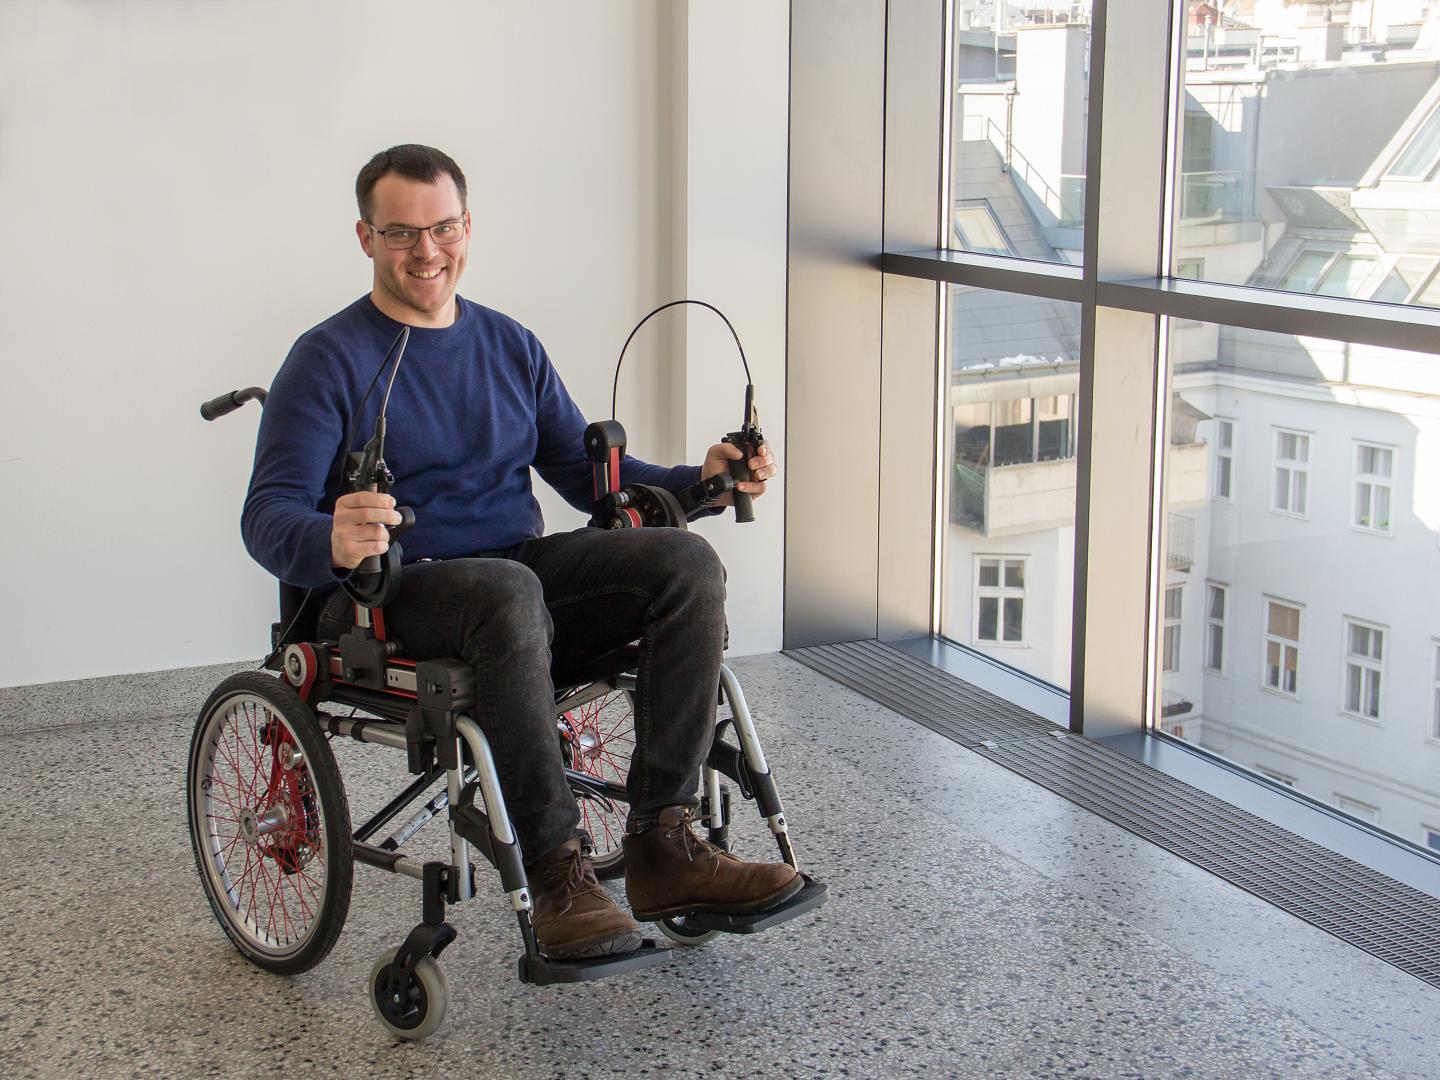 Markus Puchinger Demonstrating the New Wheelchair